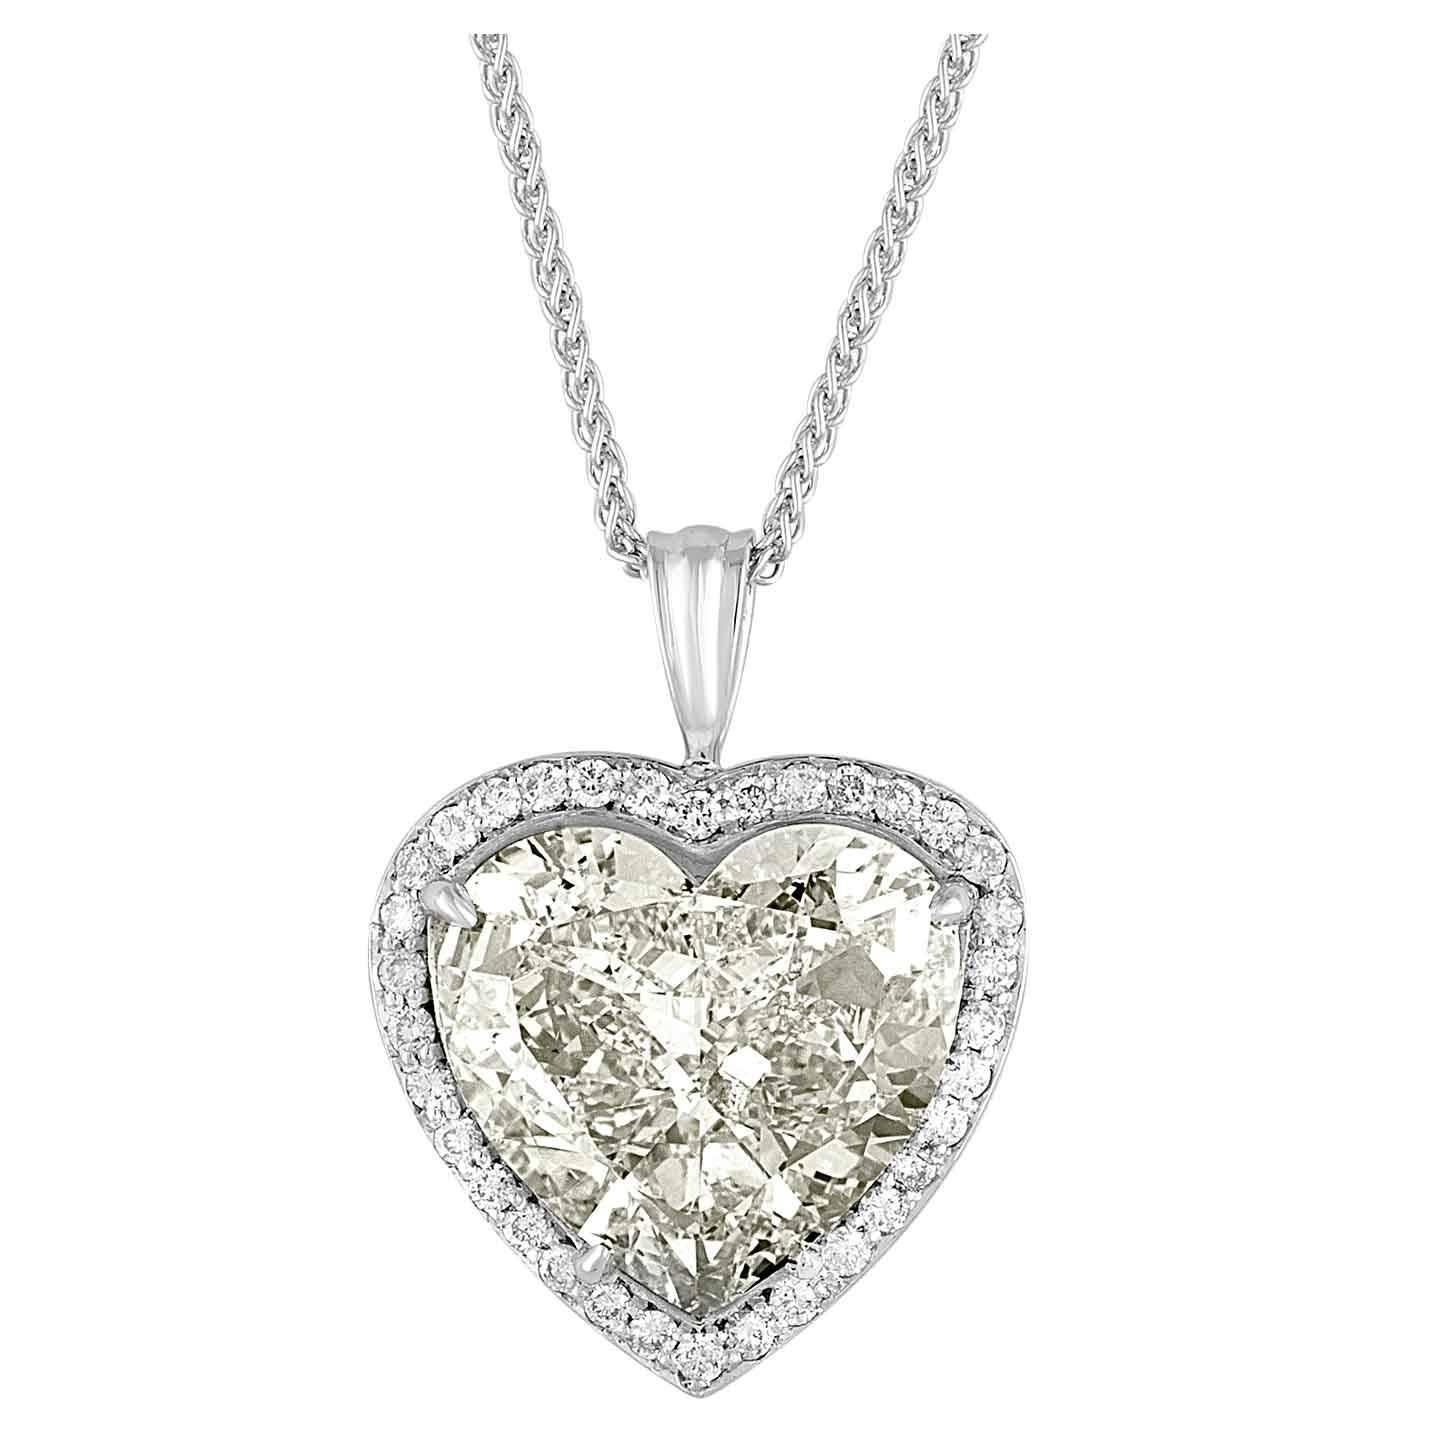 7 Carat GIA Certified Heart Shaped Diamond Gold Pendant